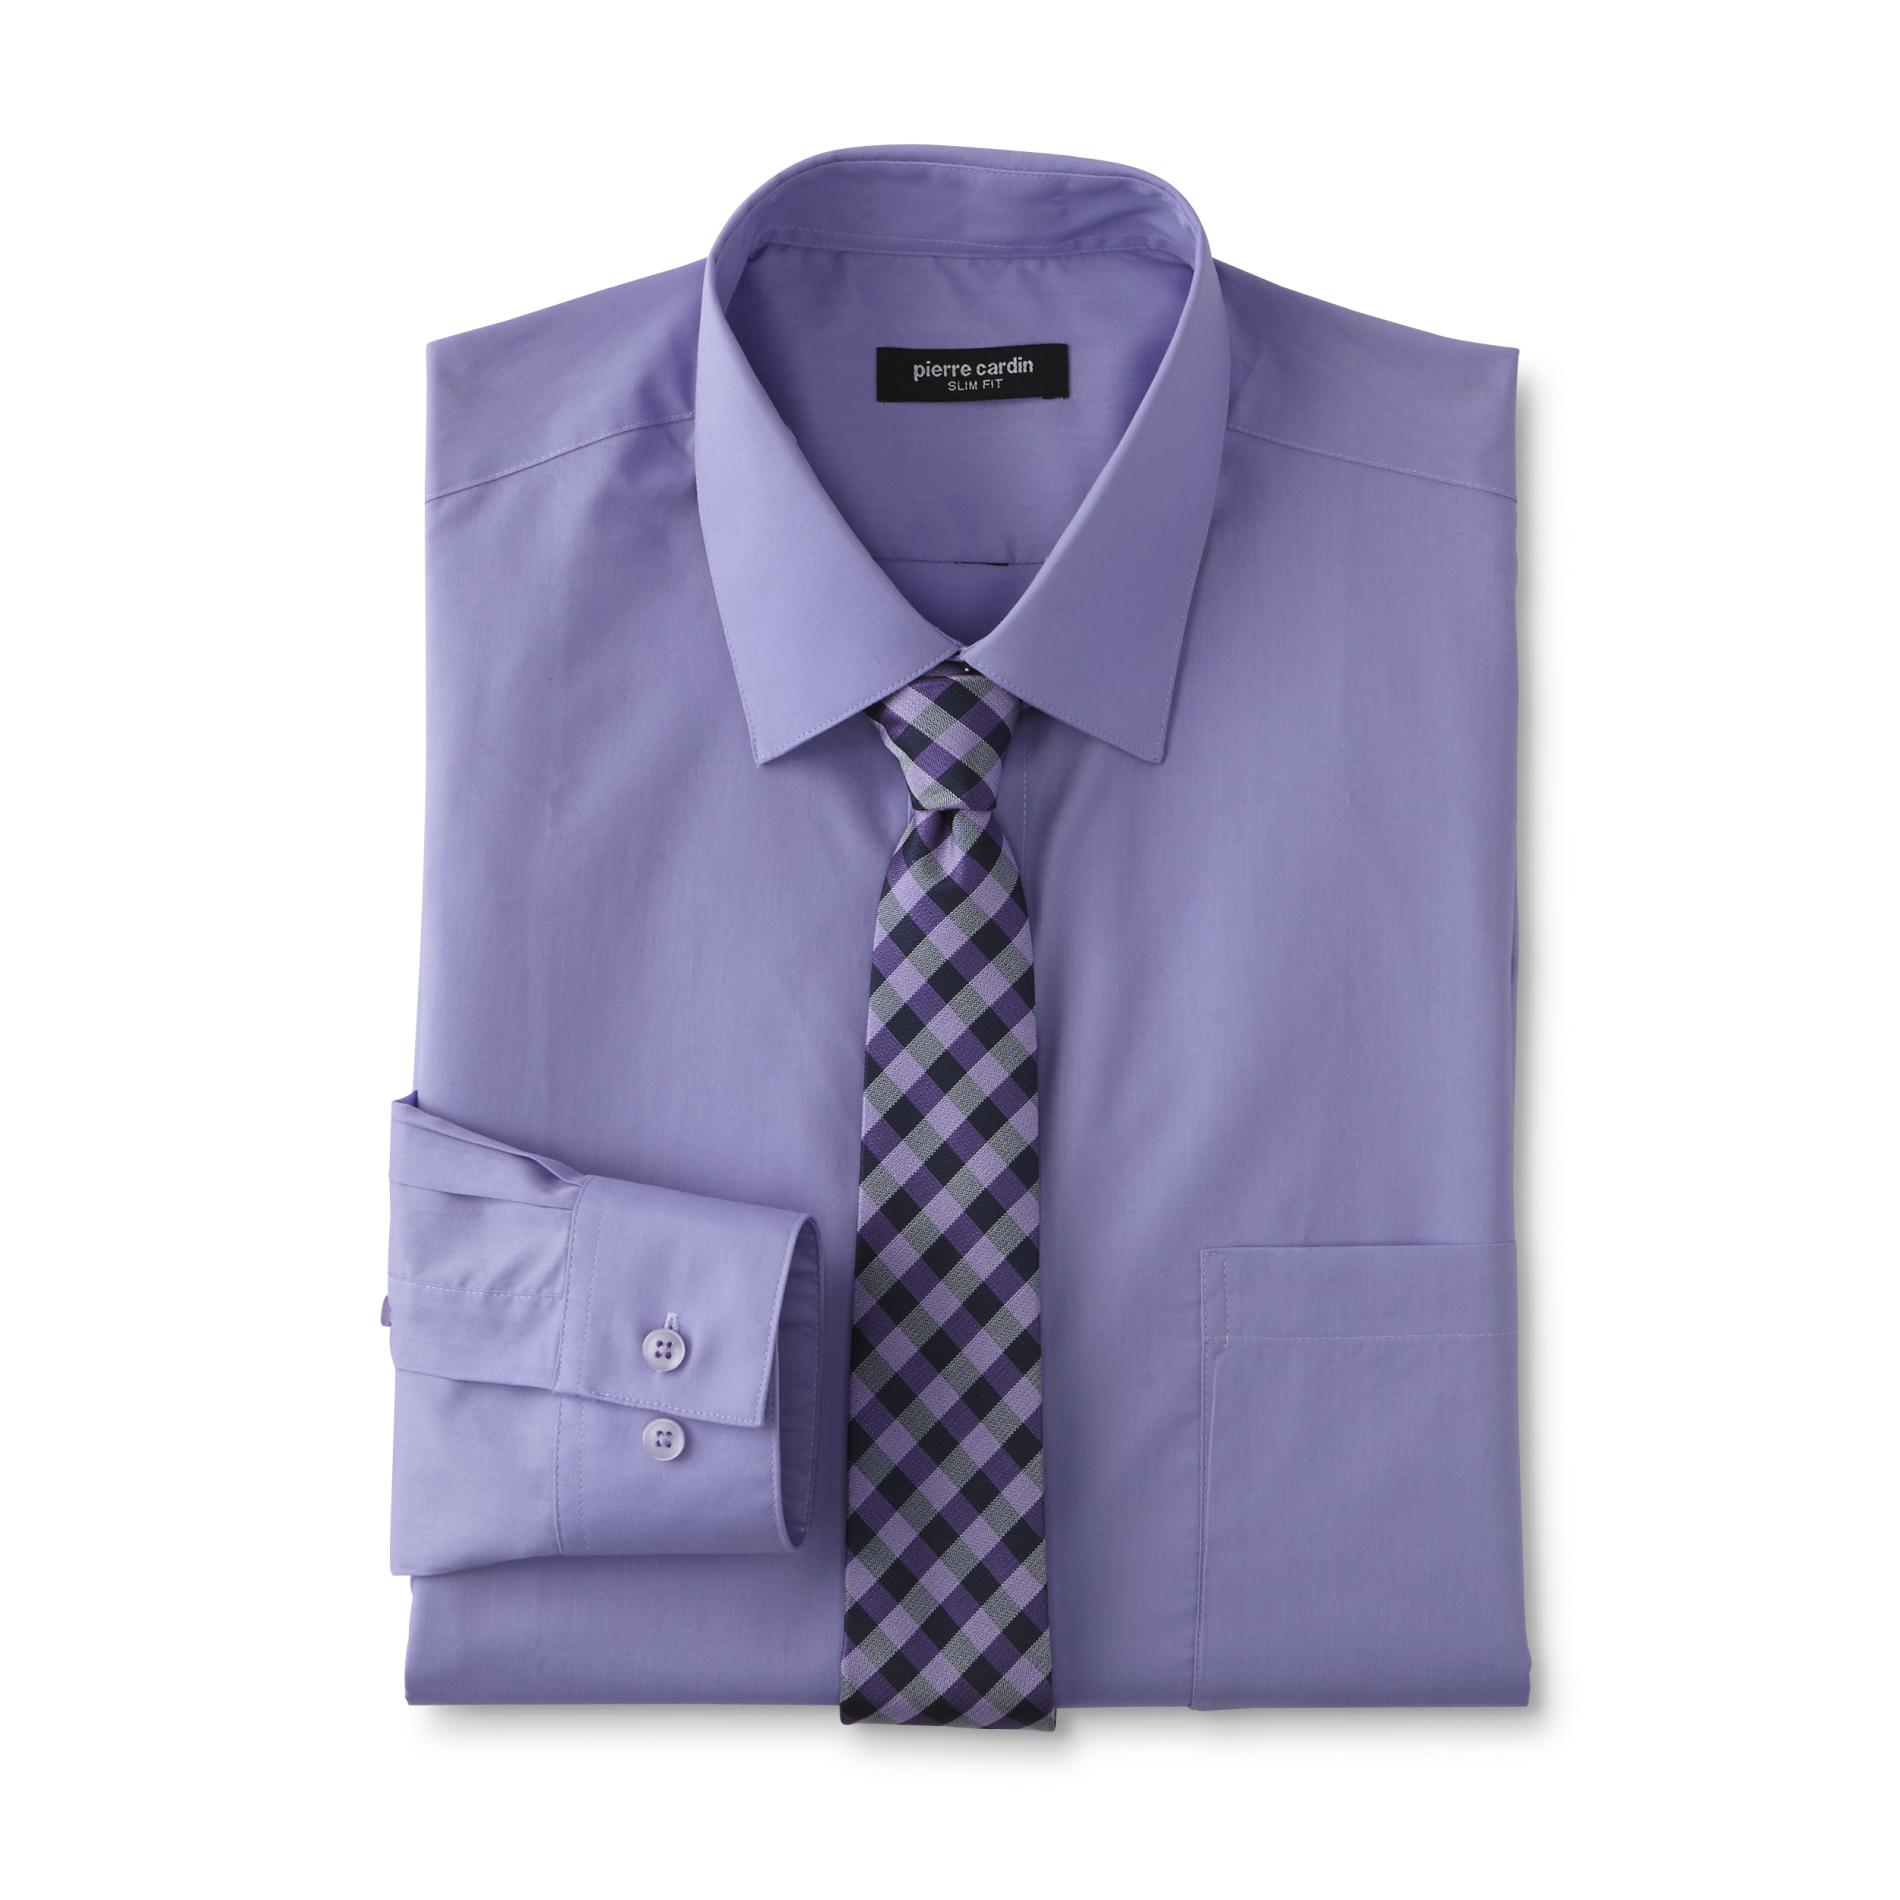 Pierre Cardin Men's Slim Fit Dress Shirt & Tie - Gingham